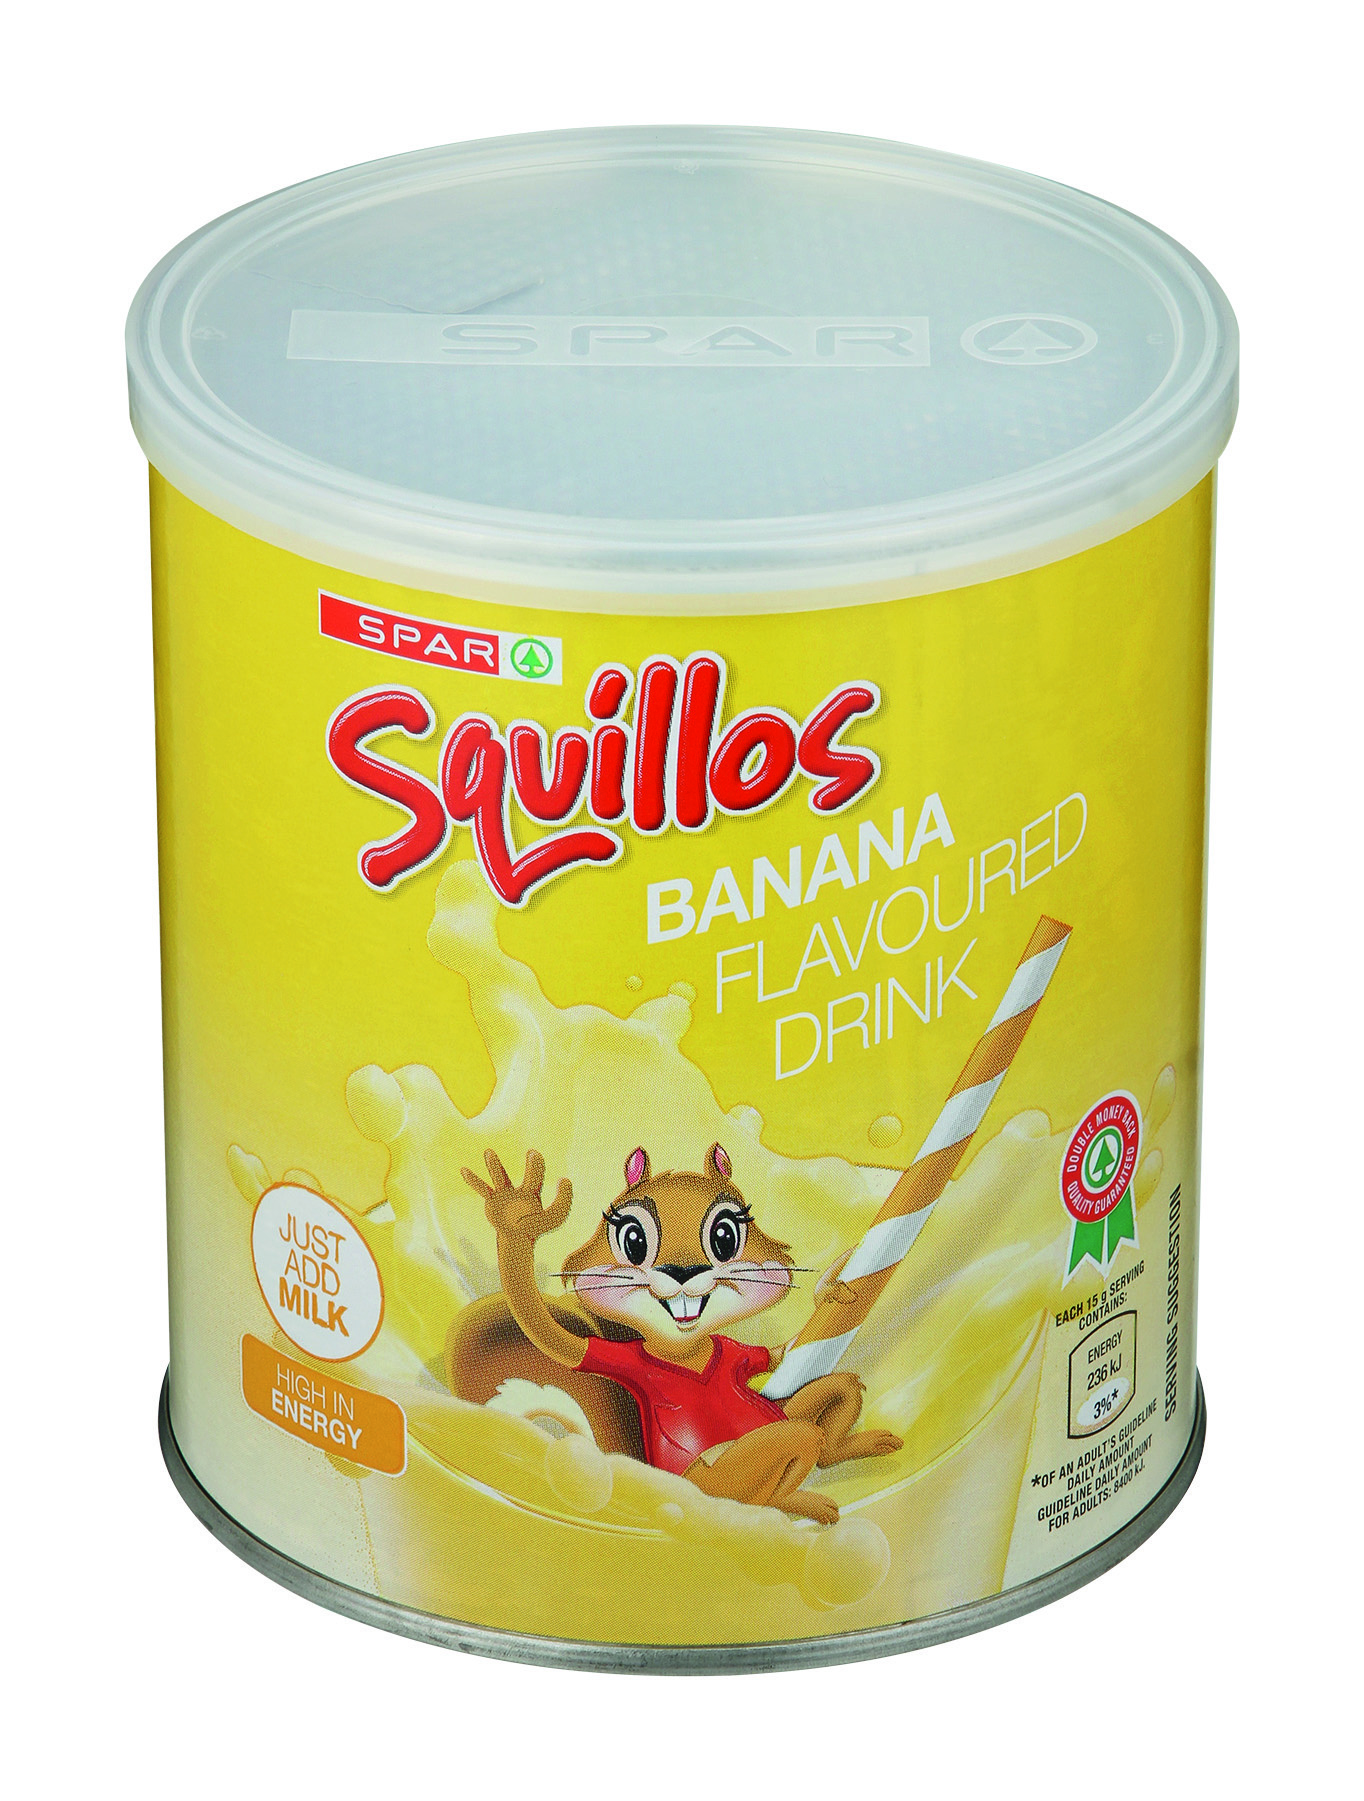 squillos milk modifier banana